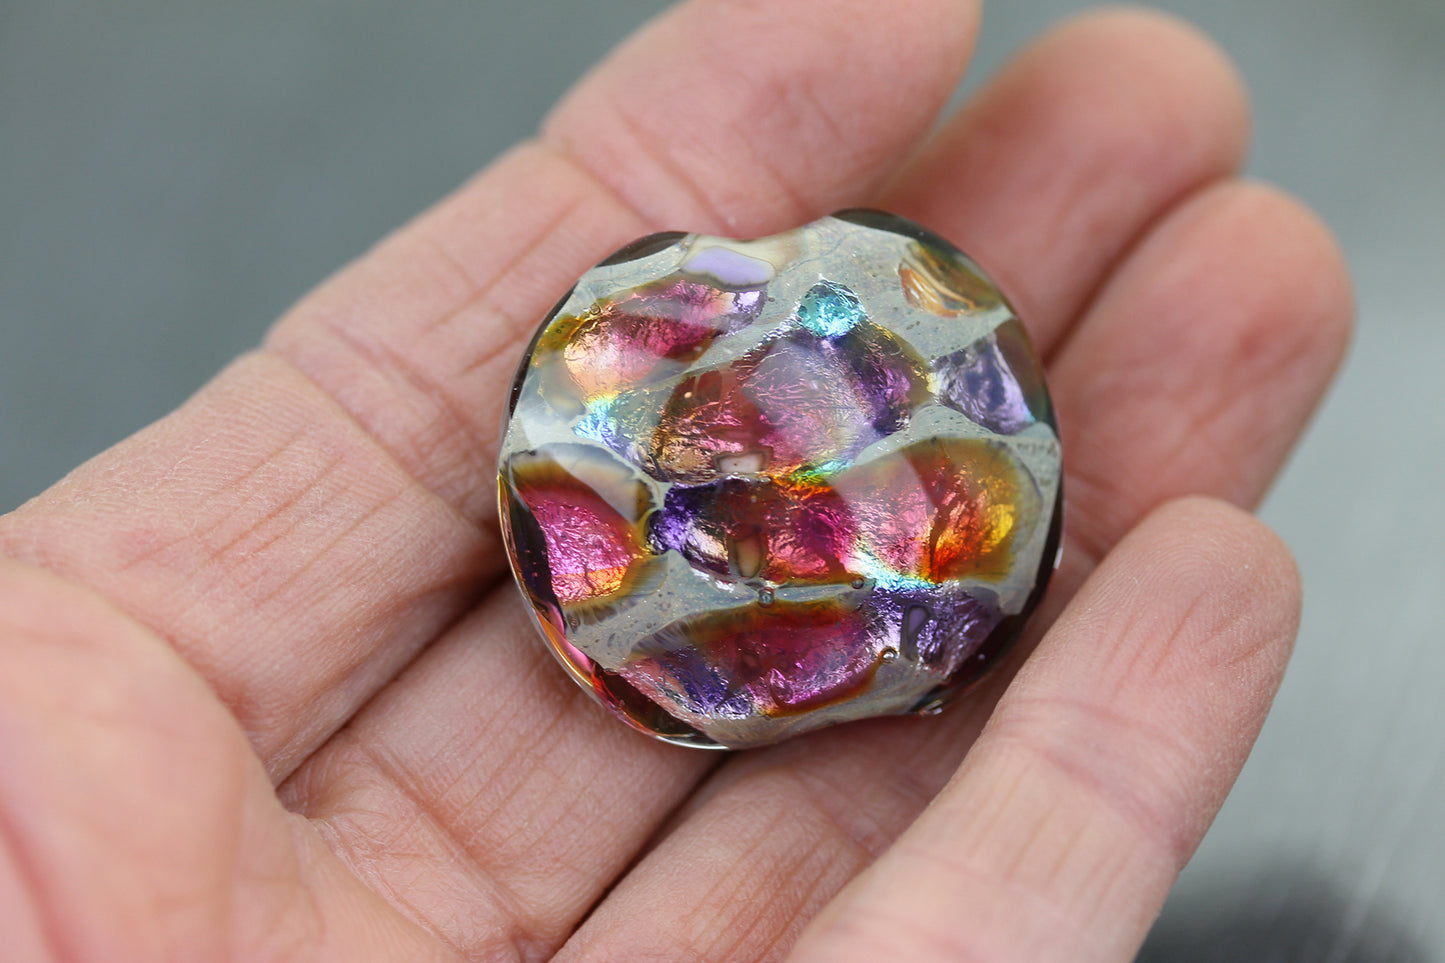 Aqua, pink & purple Sea Rocks lentil focal bead  #224144